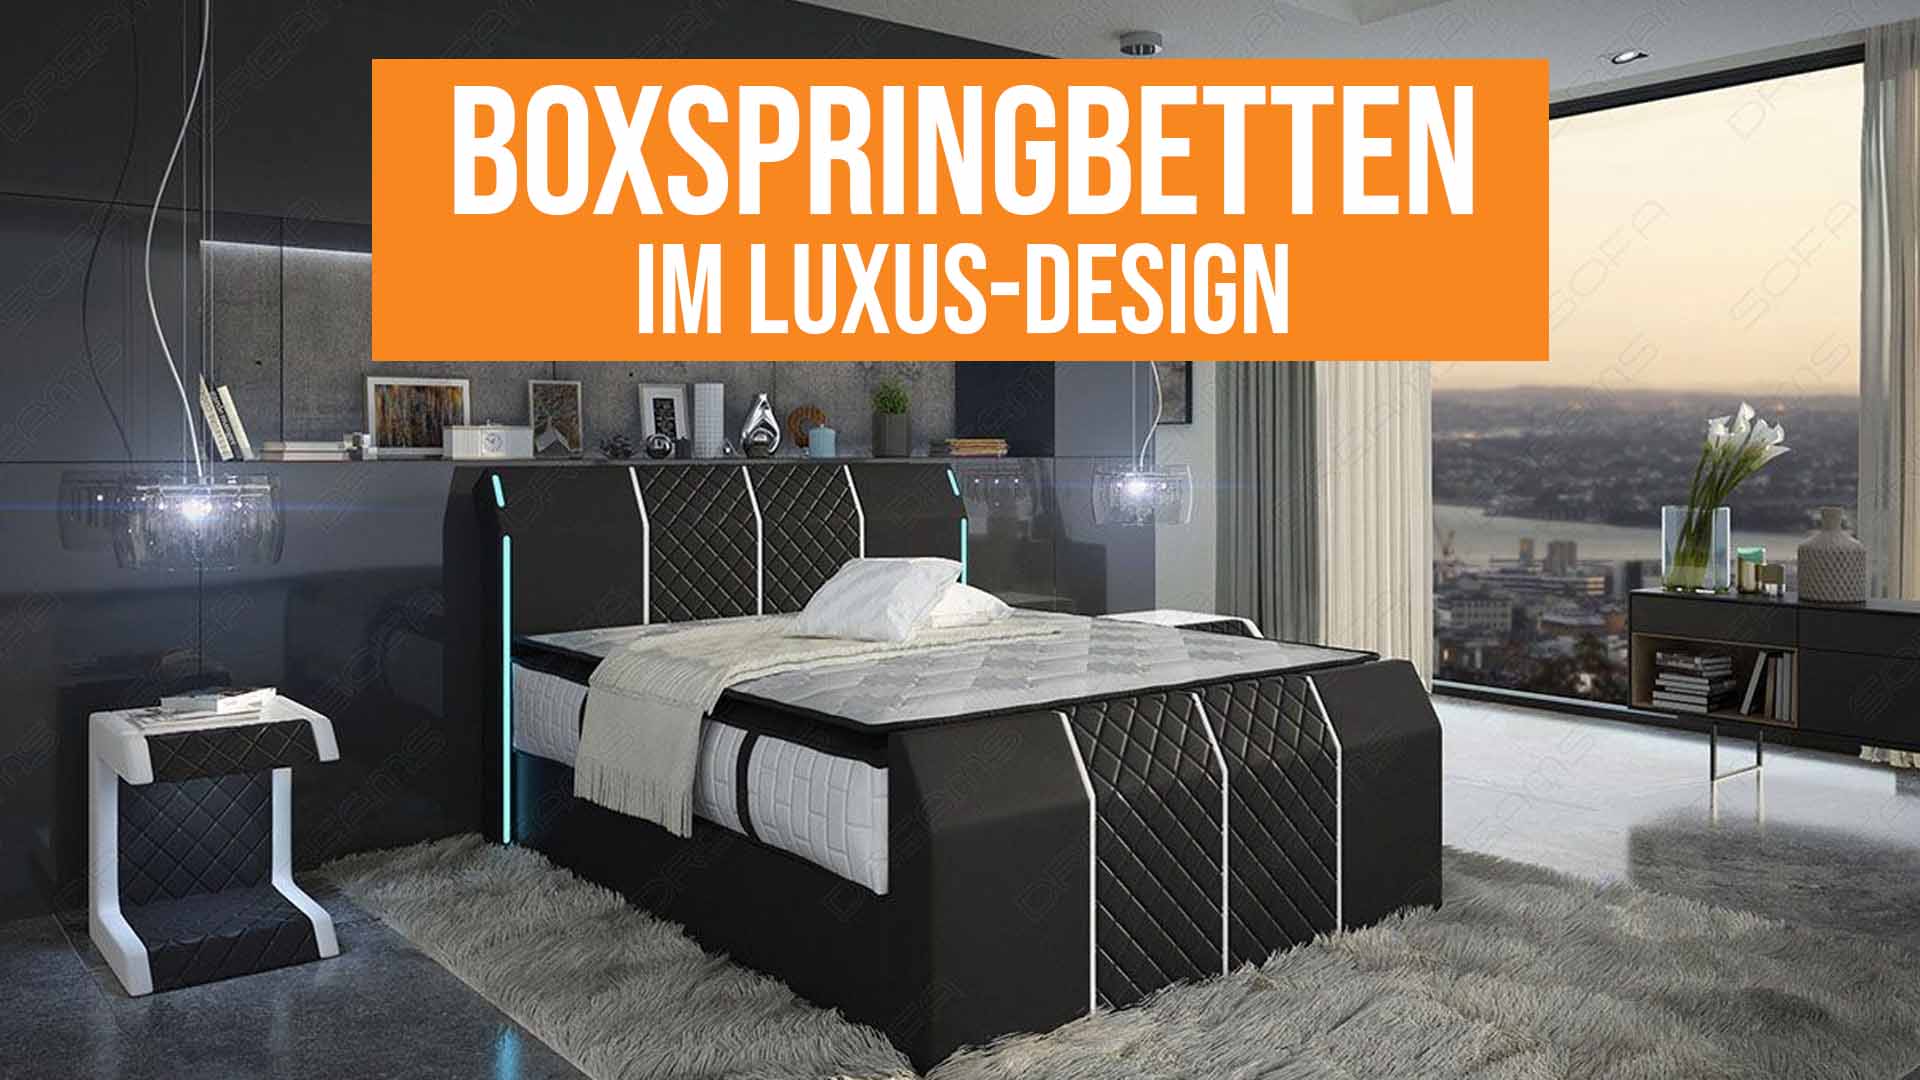 Boxspringbetten im Luxus Design